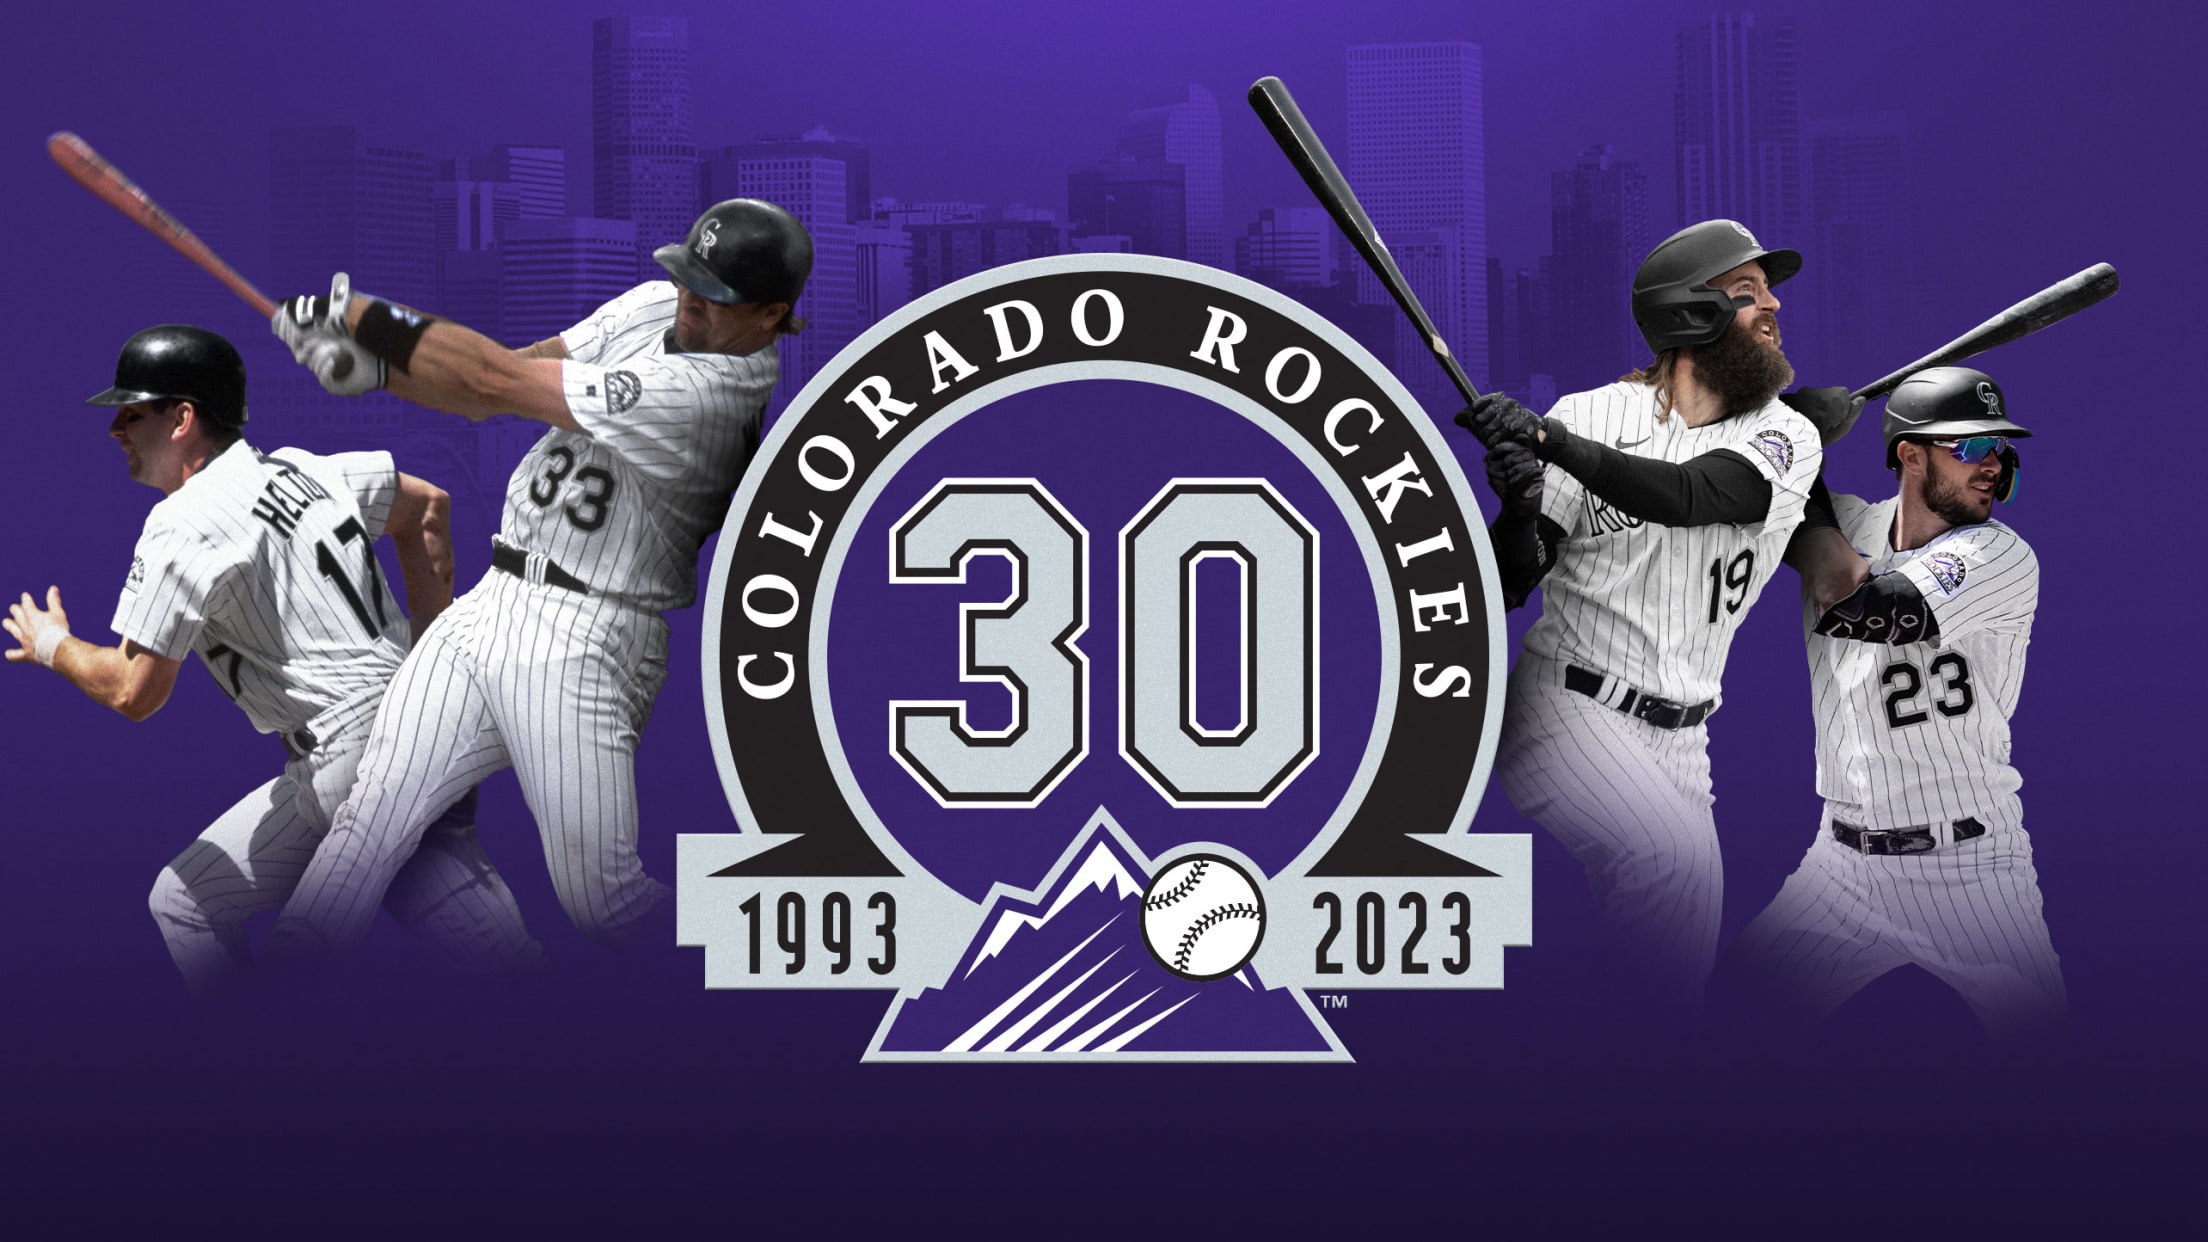 Official Colorado rockies major league baseball team logo 2023 T